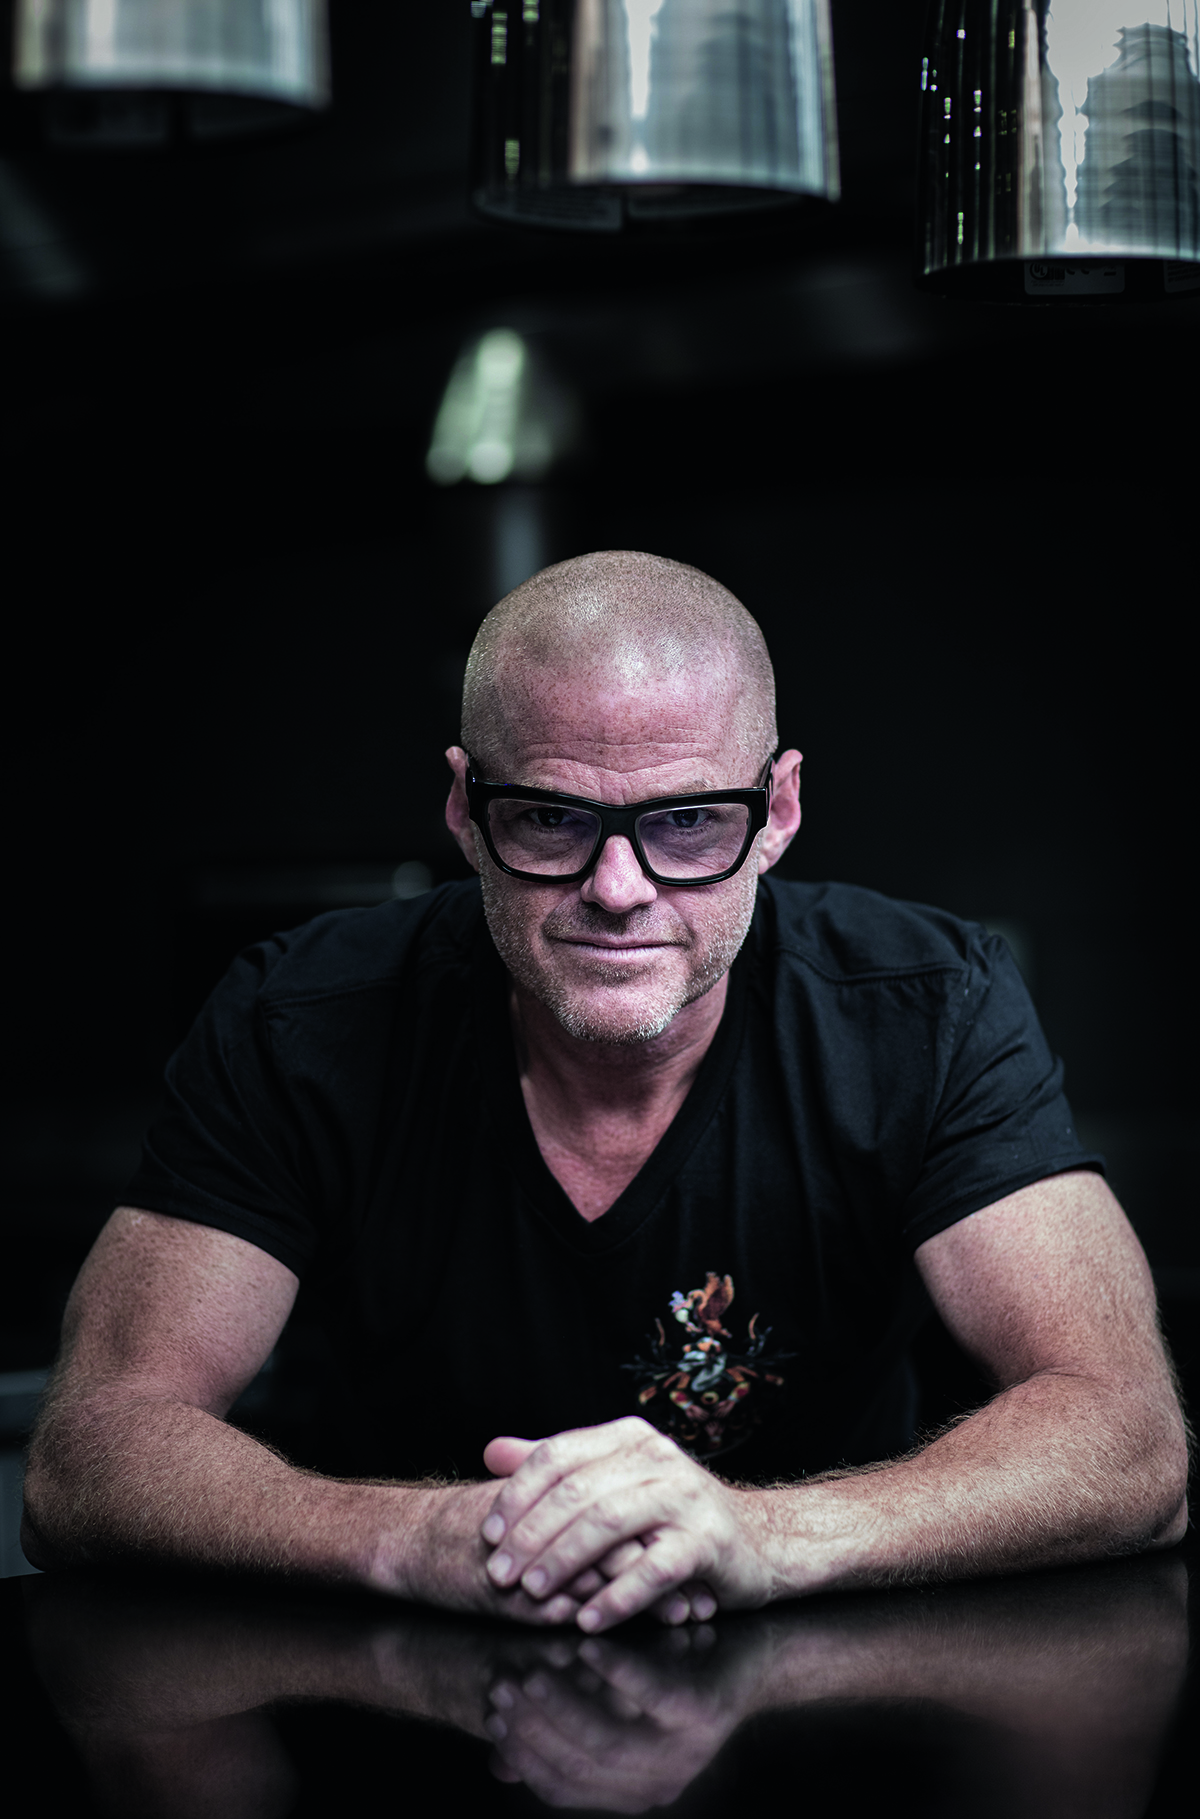 A bald man wearing a v neck black t shirt and glasses staring at the camera